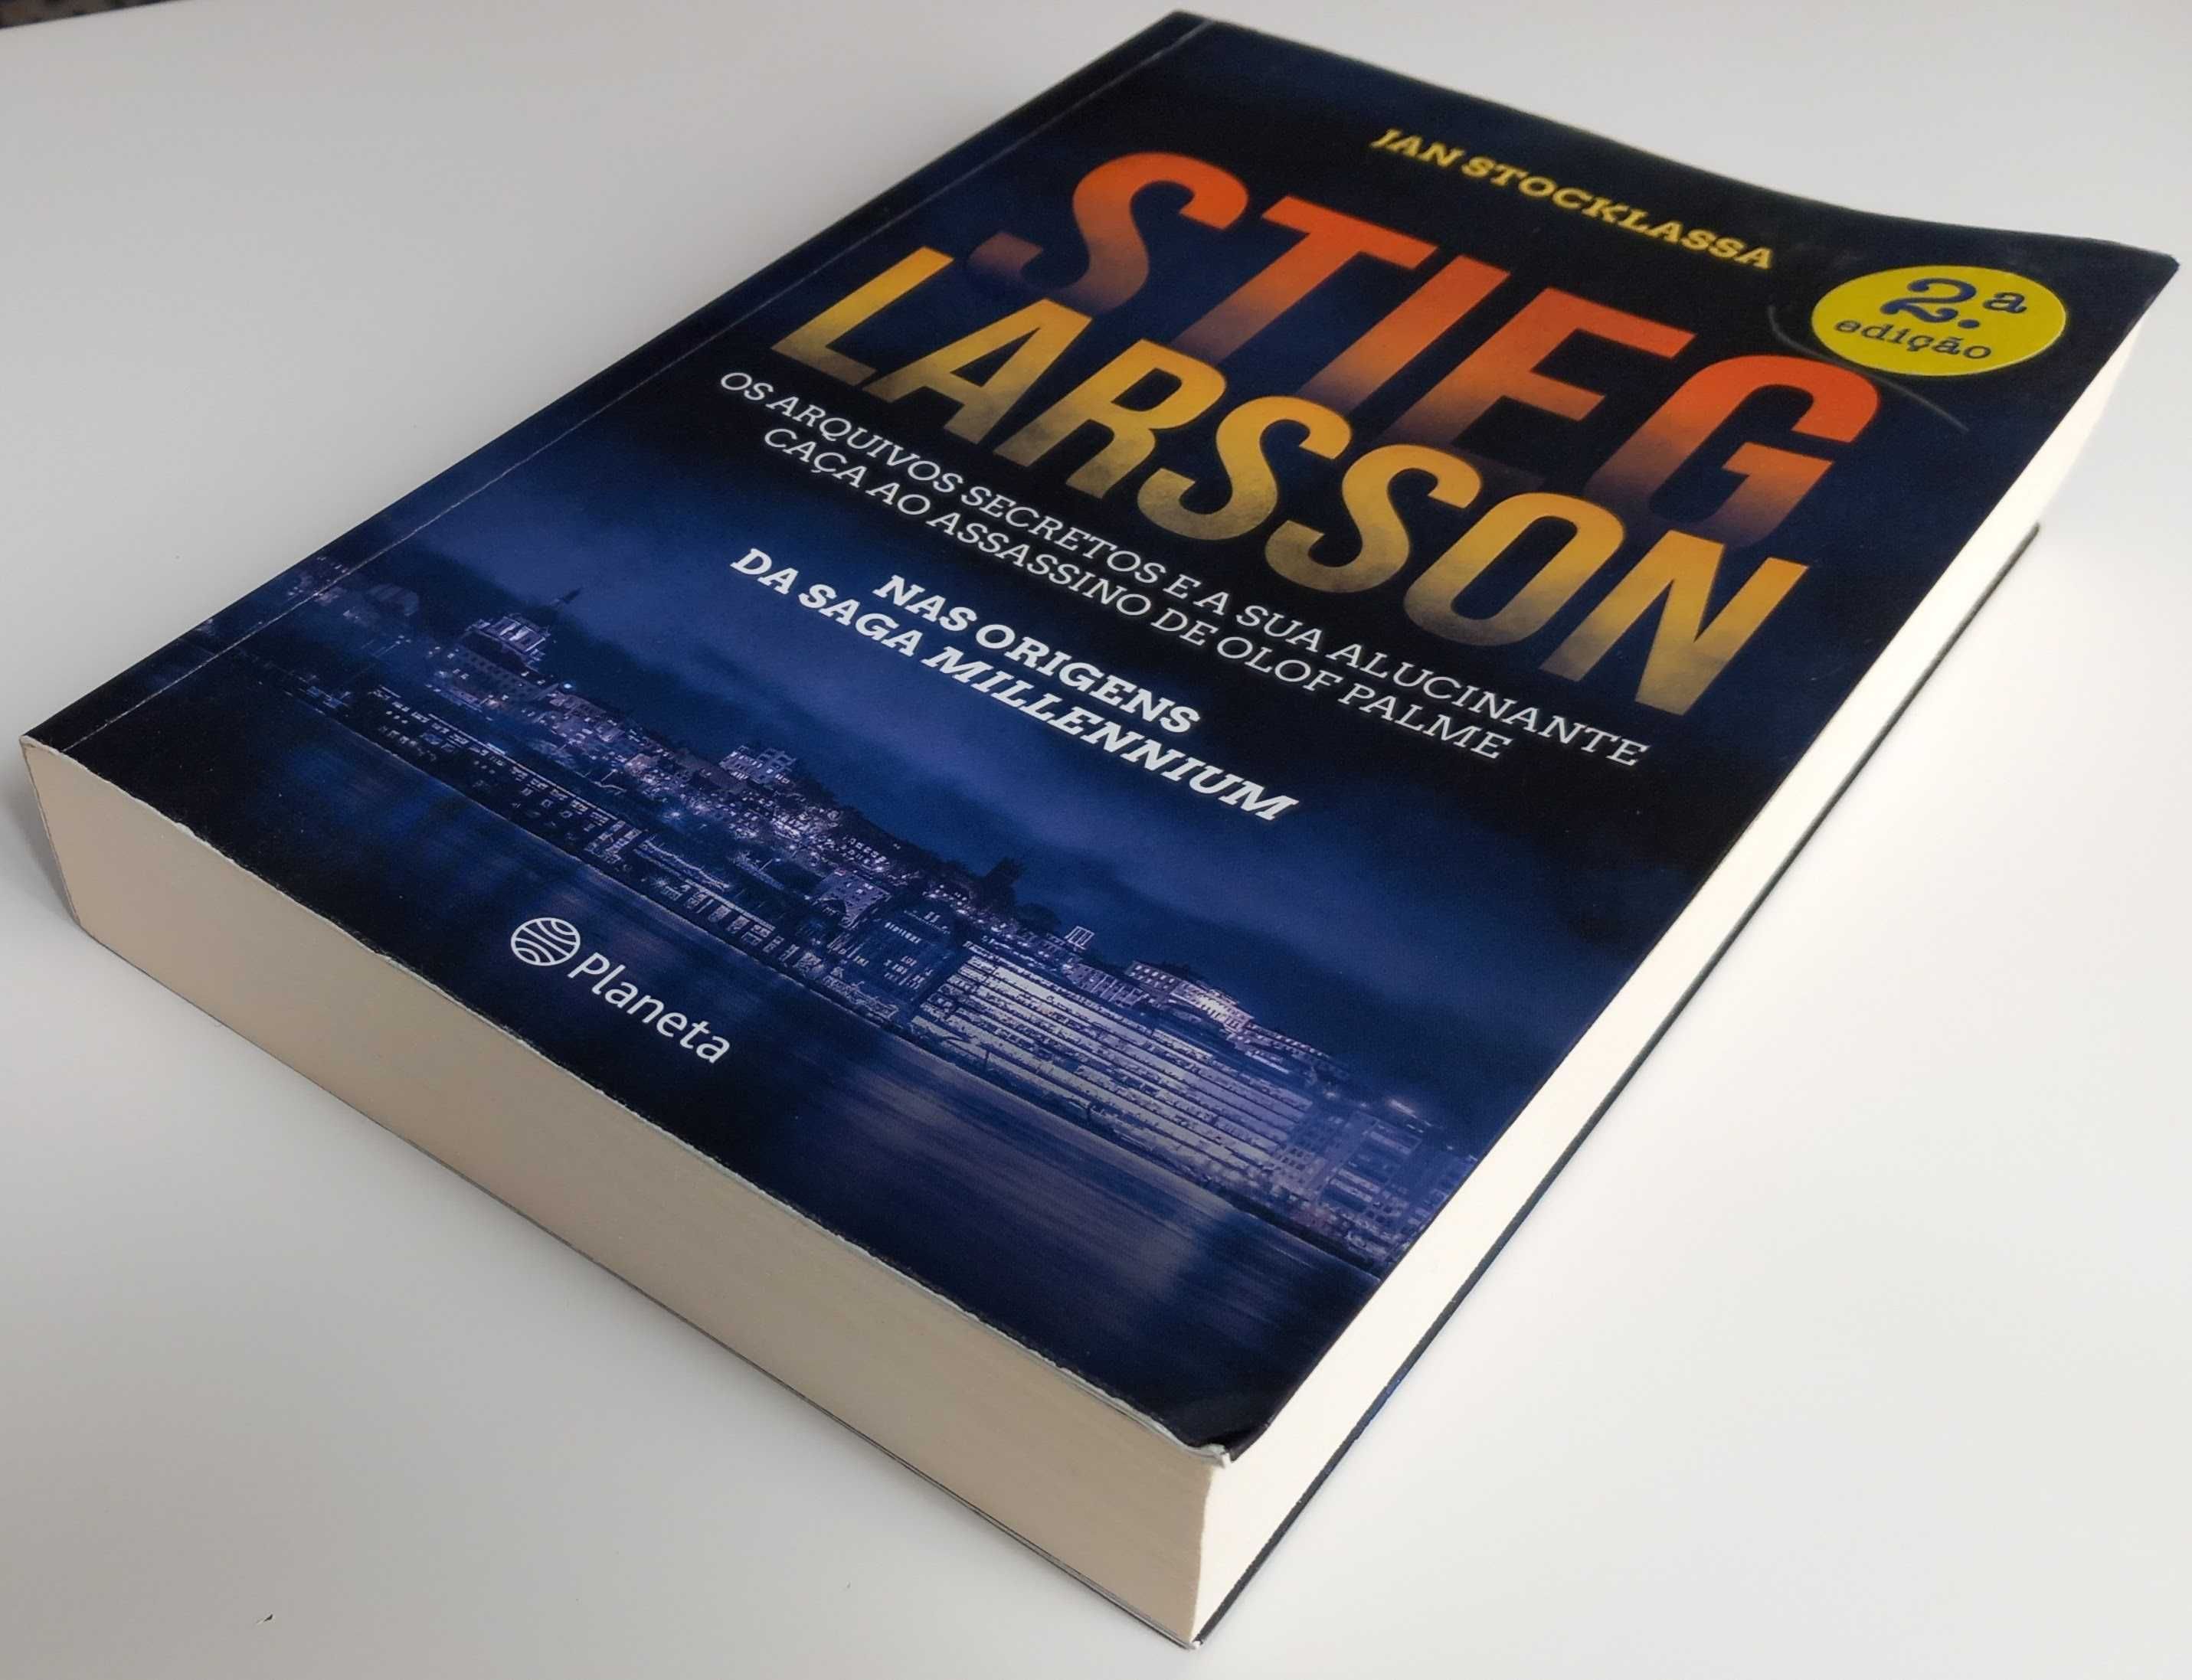 Livro Stieg Larsson Os Arquivos Secretos d Jan Stocklassa [Portes Inc]